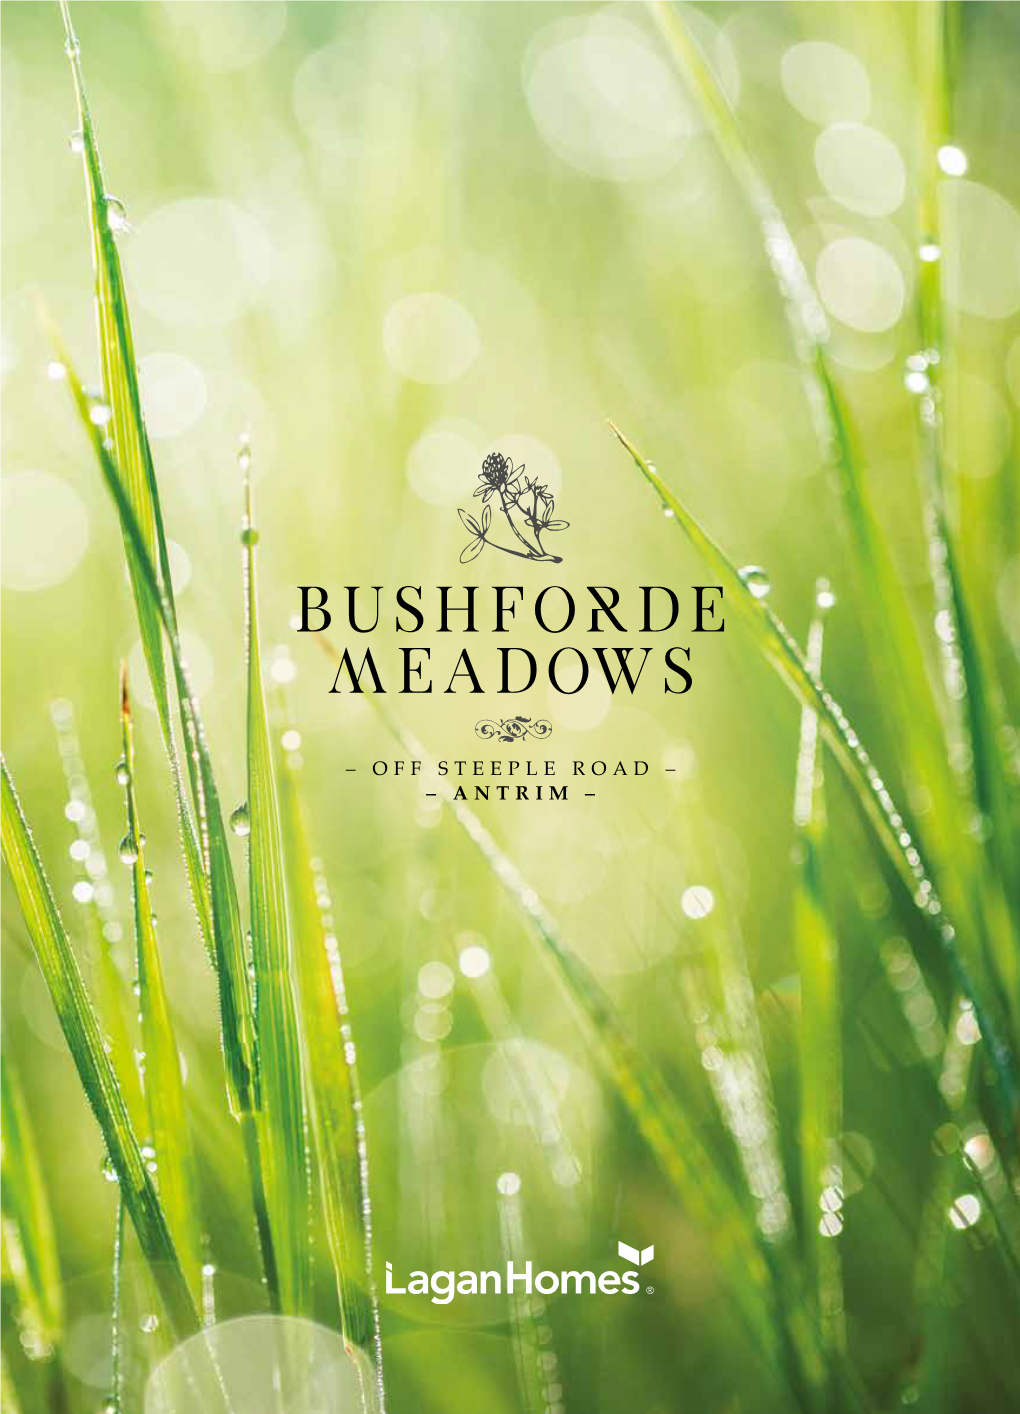 Bushforde Meadows